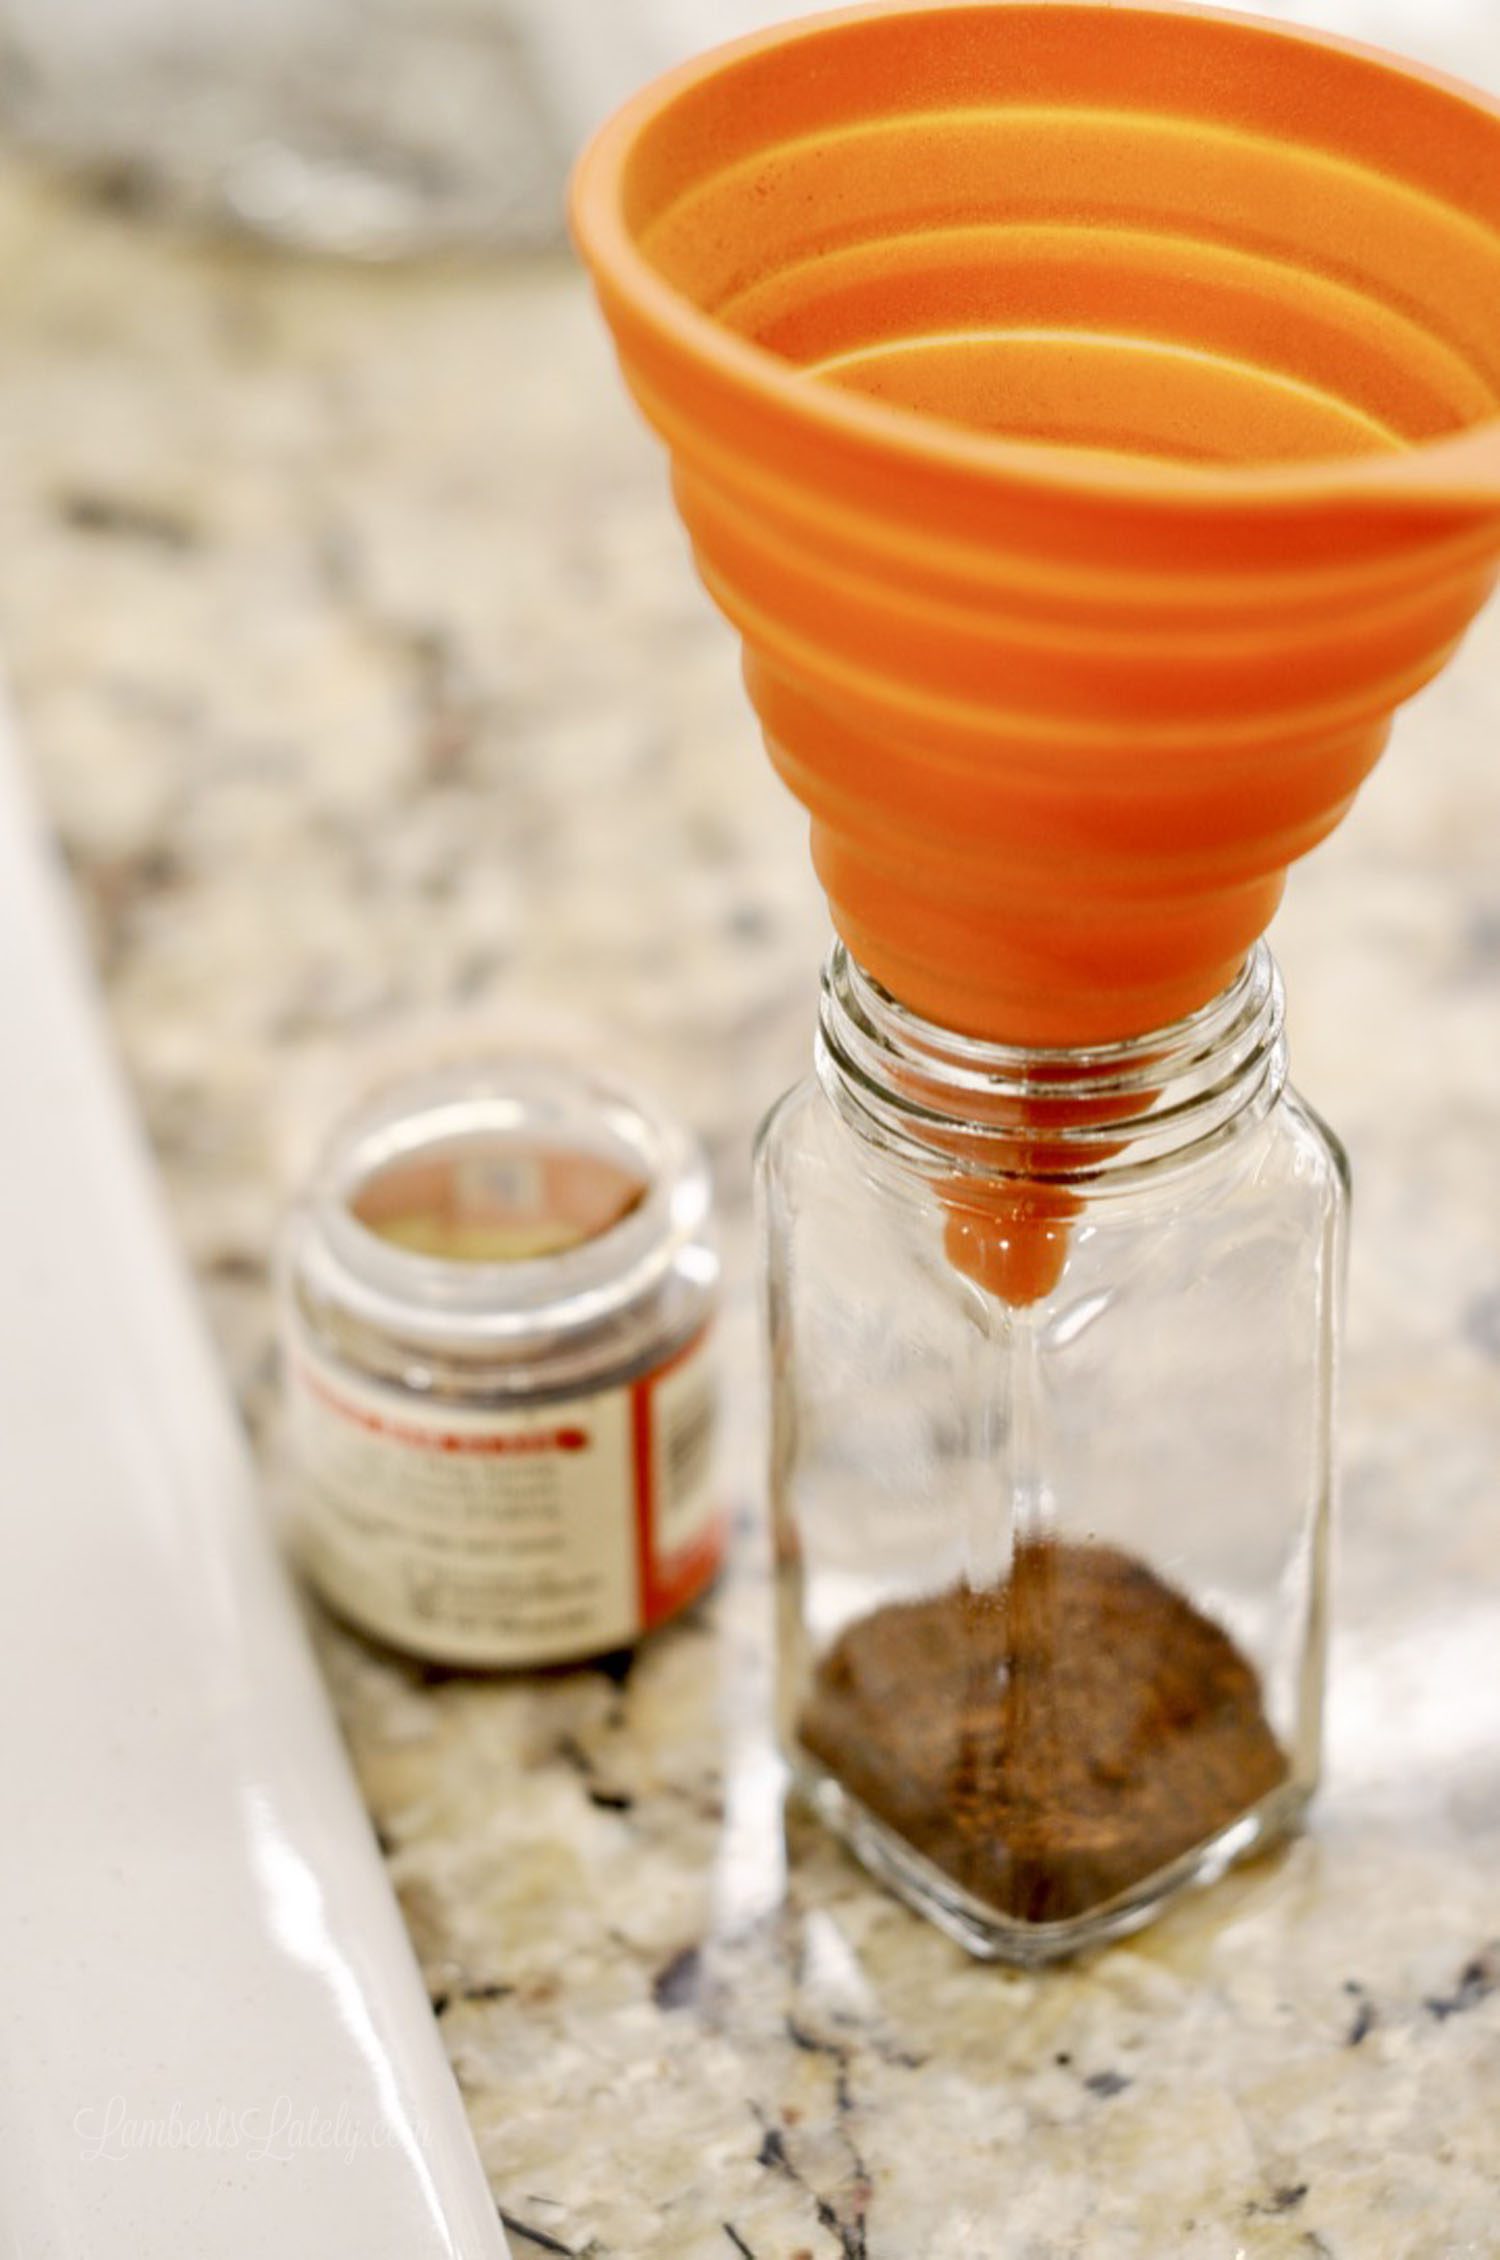 funnel in a glass spice jar.